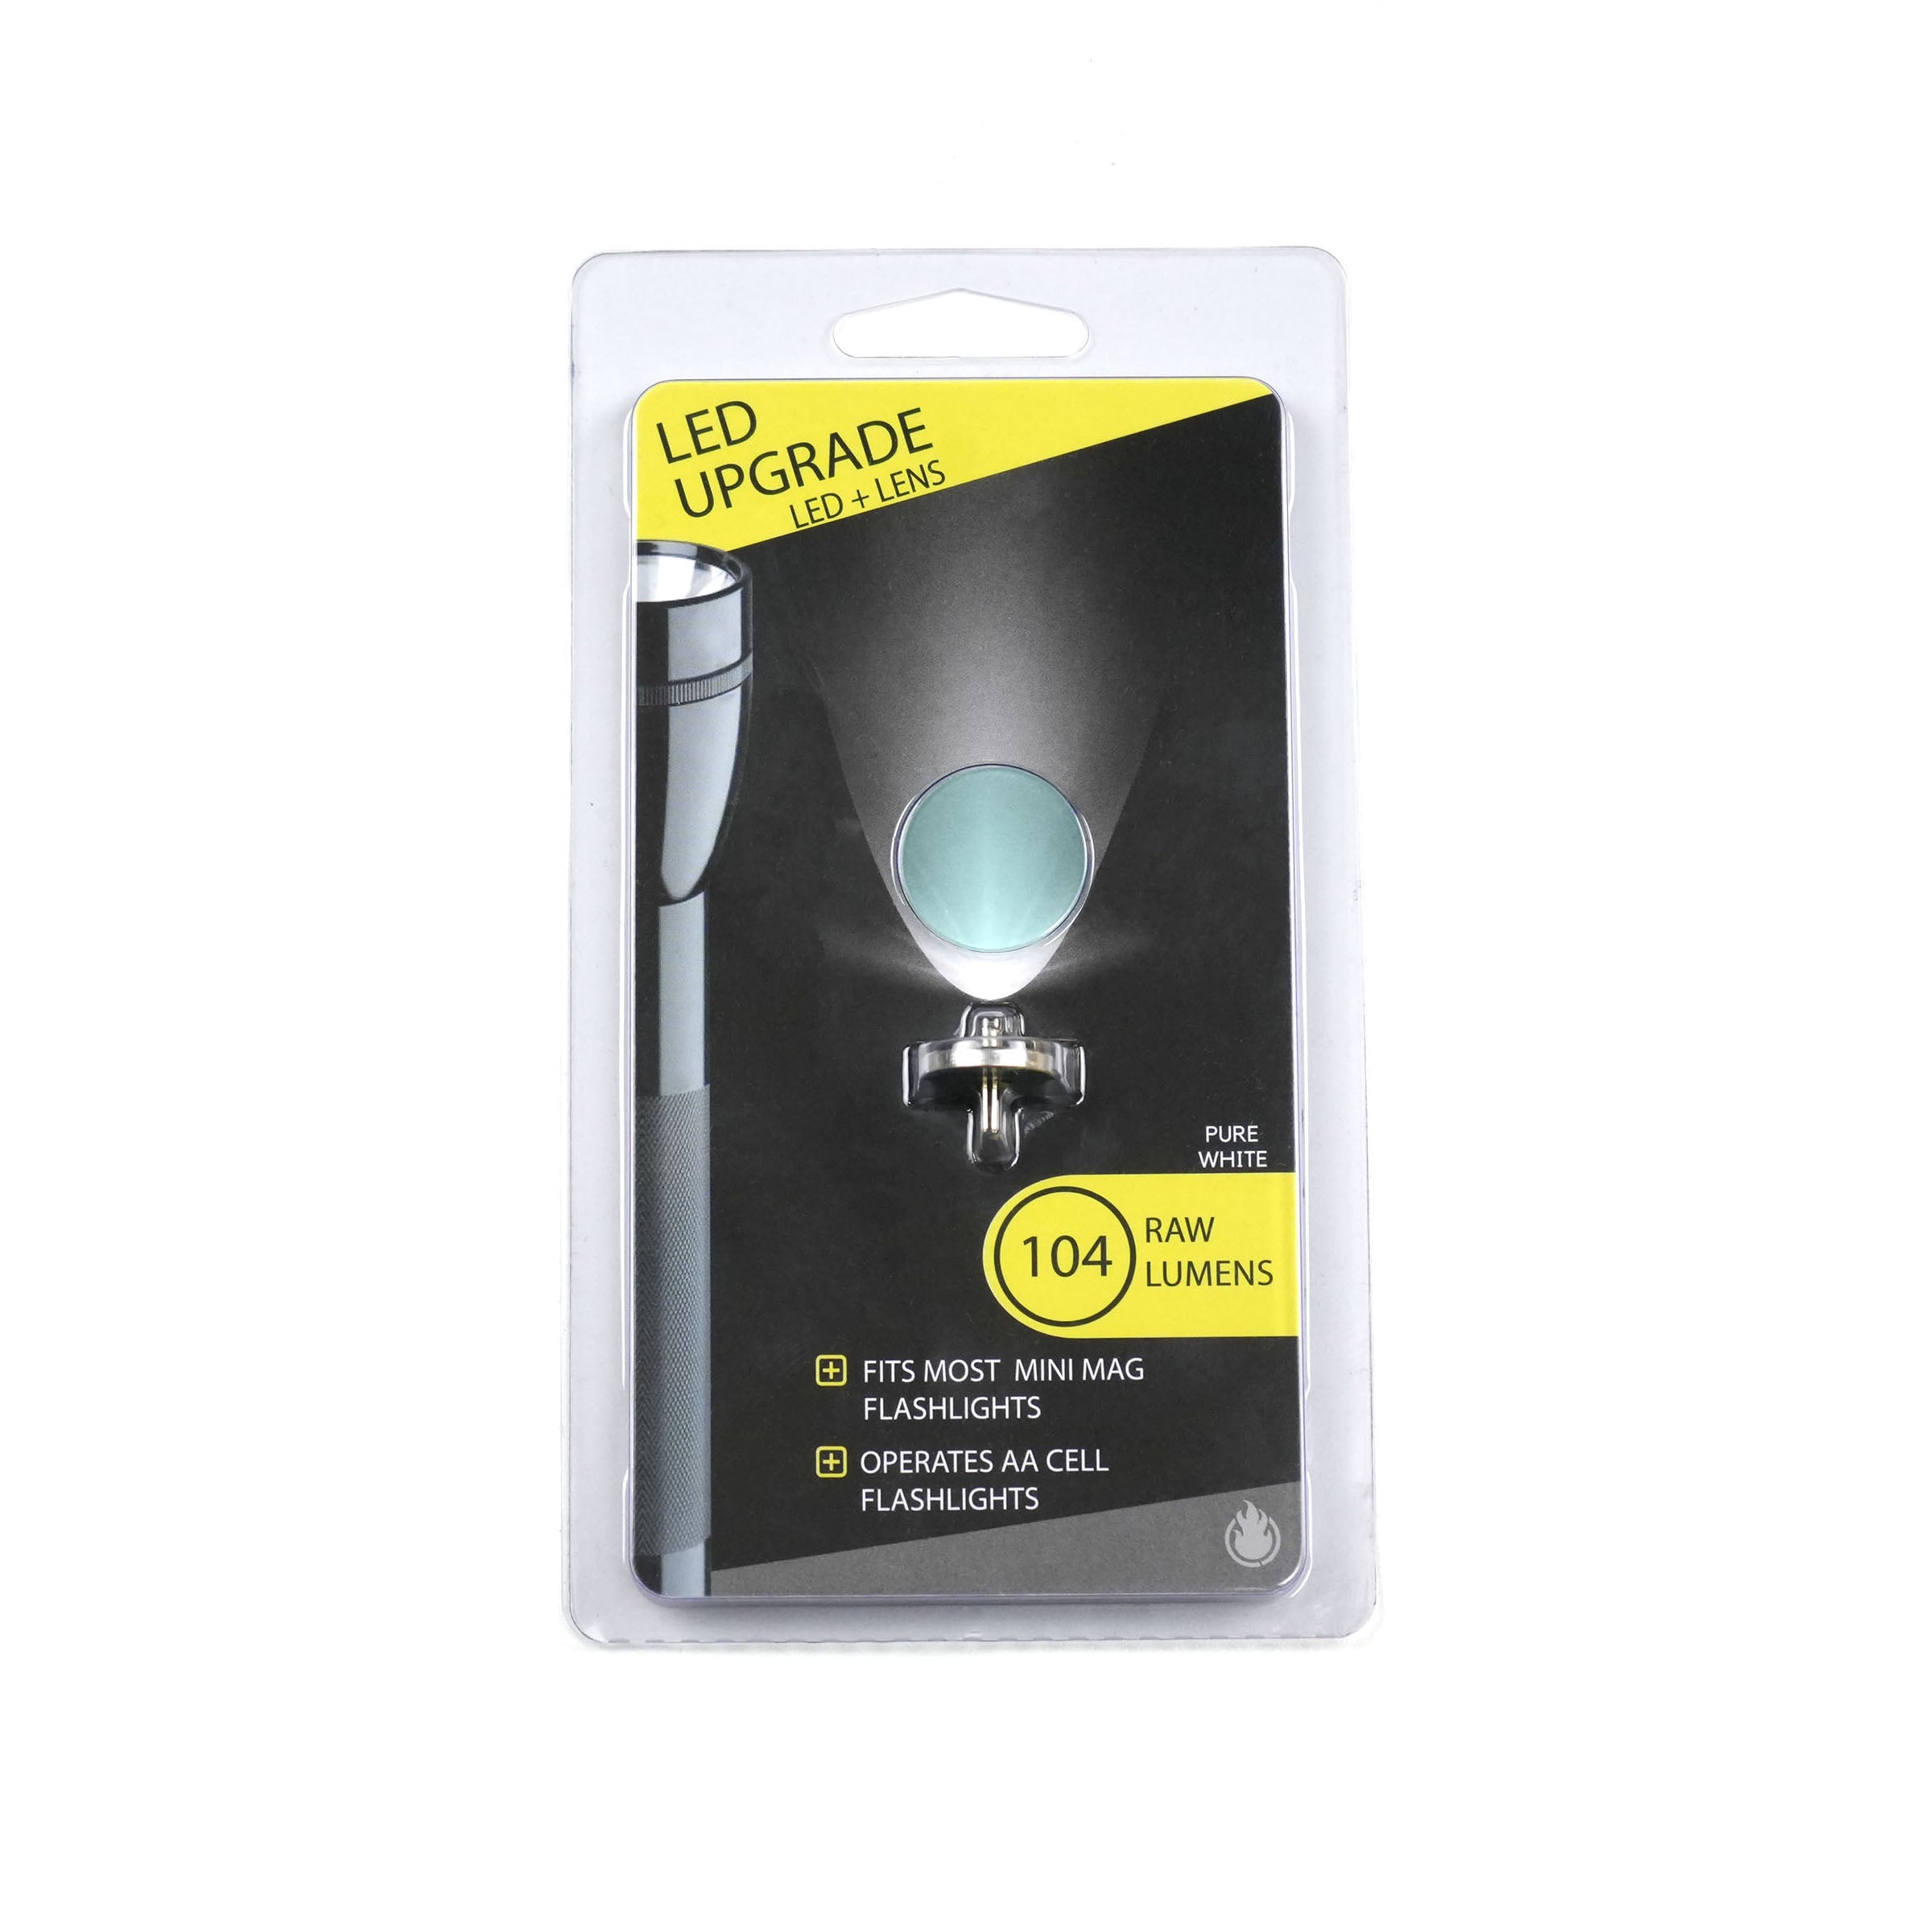 Litt Industries ultra-bright 104 lumen mini AA maglite LED upgrade and lens kit - high performance lighting enhancement for your maglite flashlight